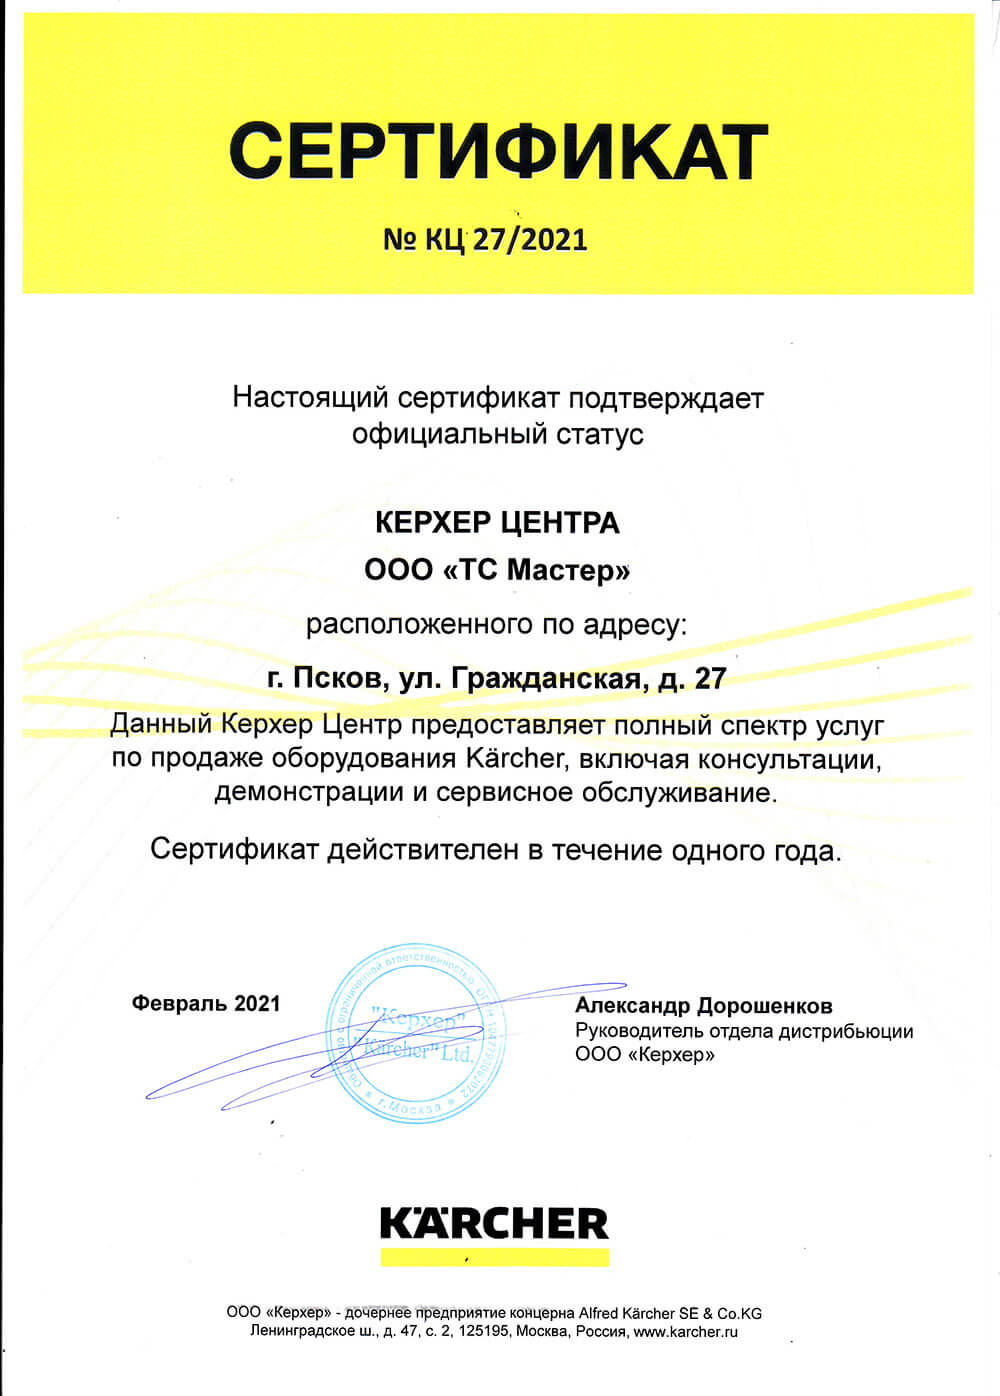 Сертификат дилера Zx8-rs5lWLW4DXHaEm5kRqsa0V7tTx76.jpg